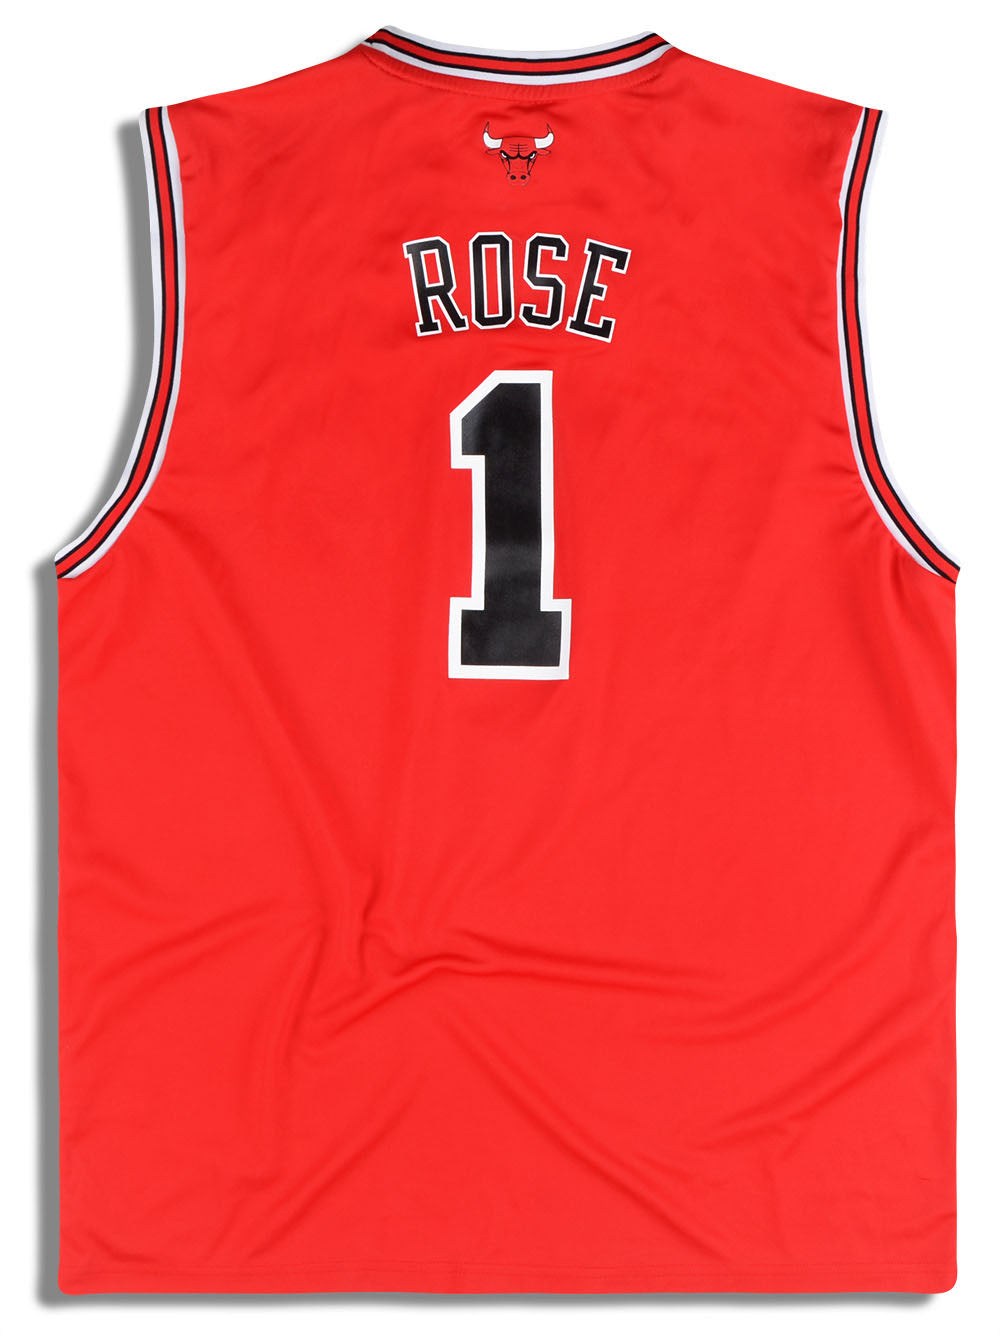 2010-14 CHICAGO BULLS ROSE #1 ADIDAS JERSEY (AWAY) XL